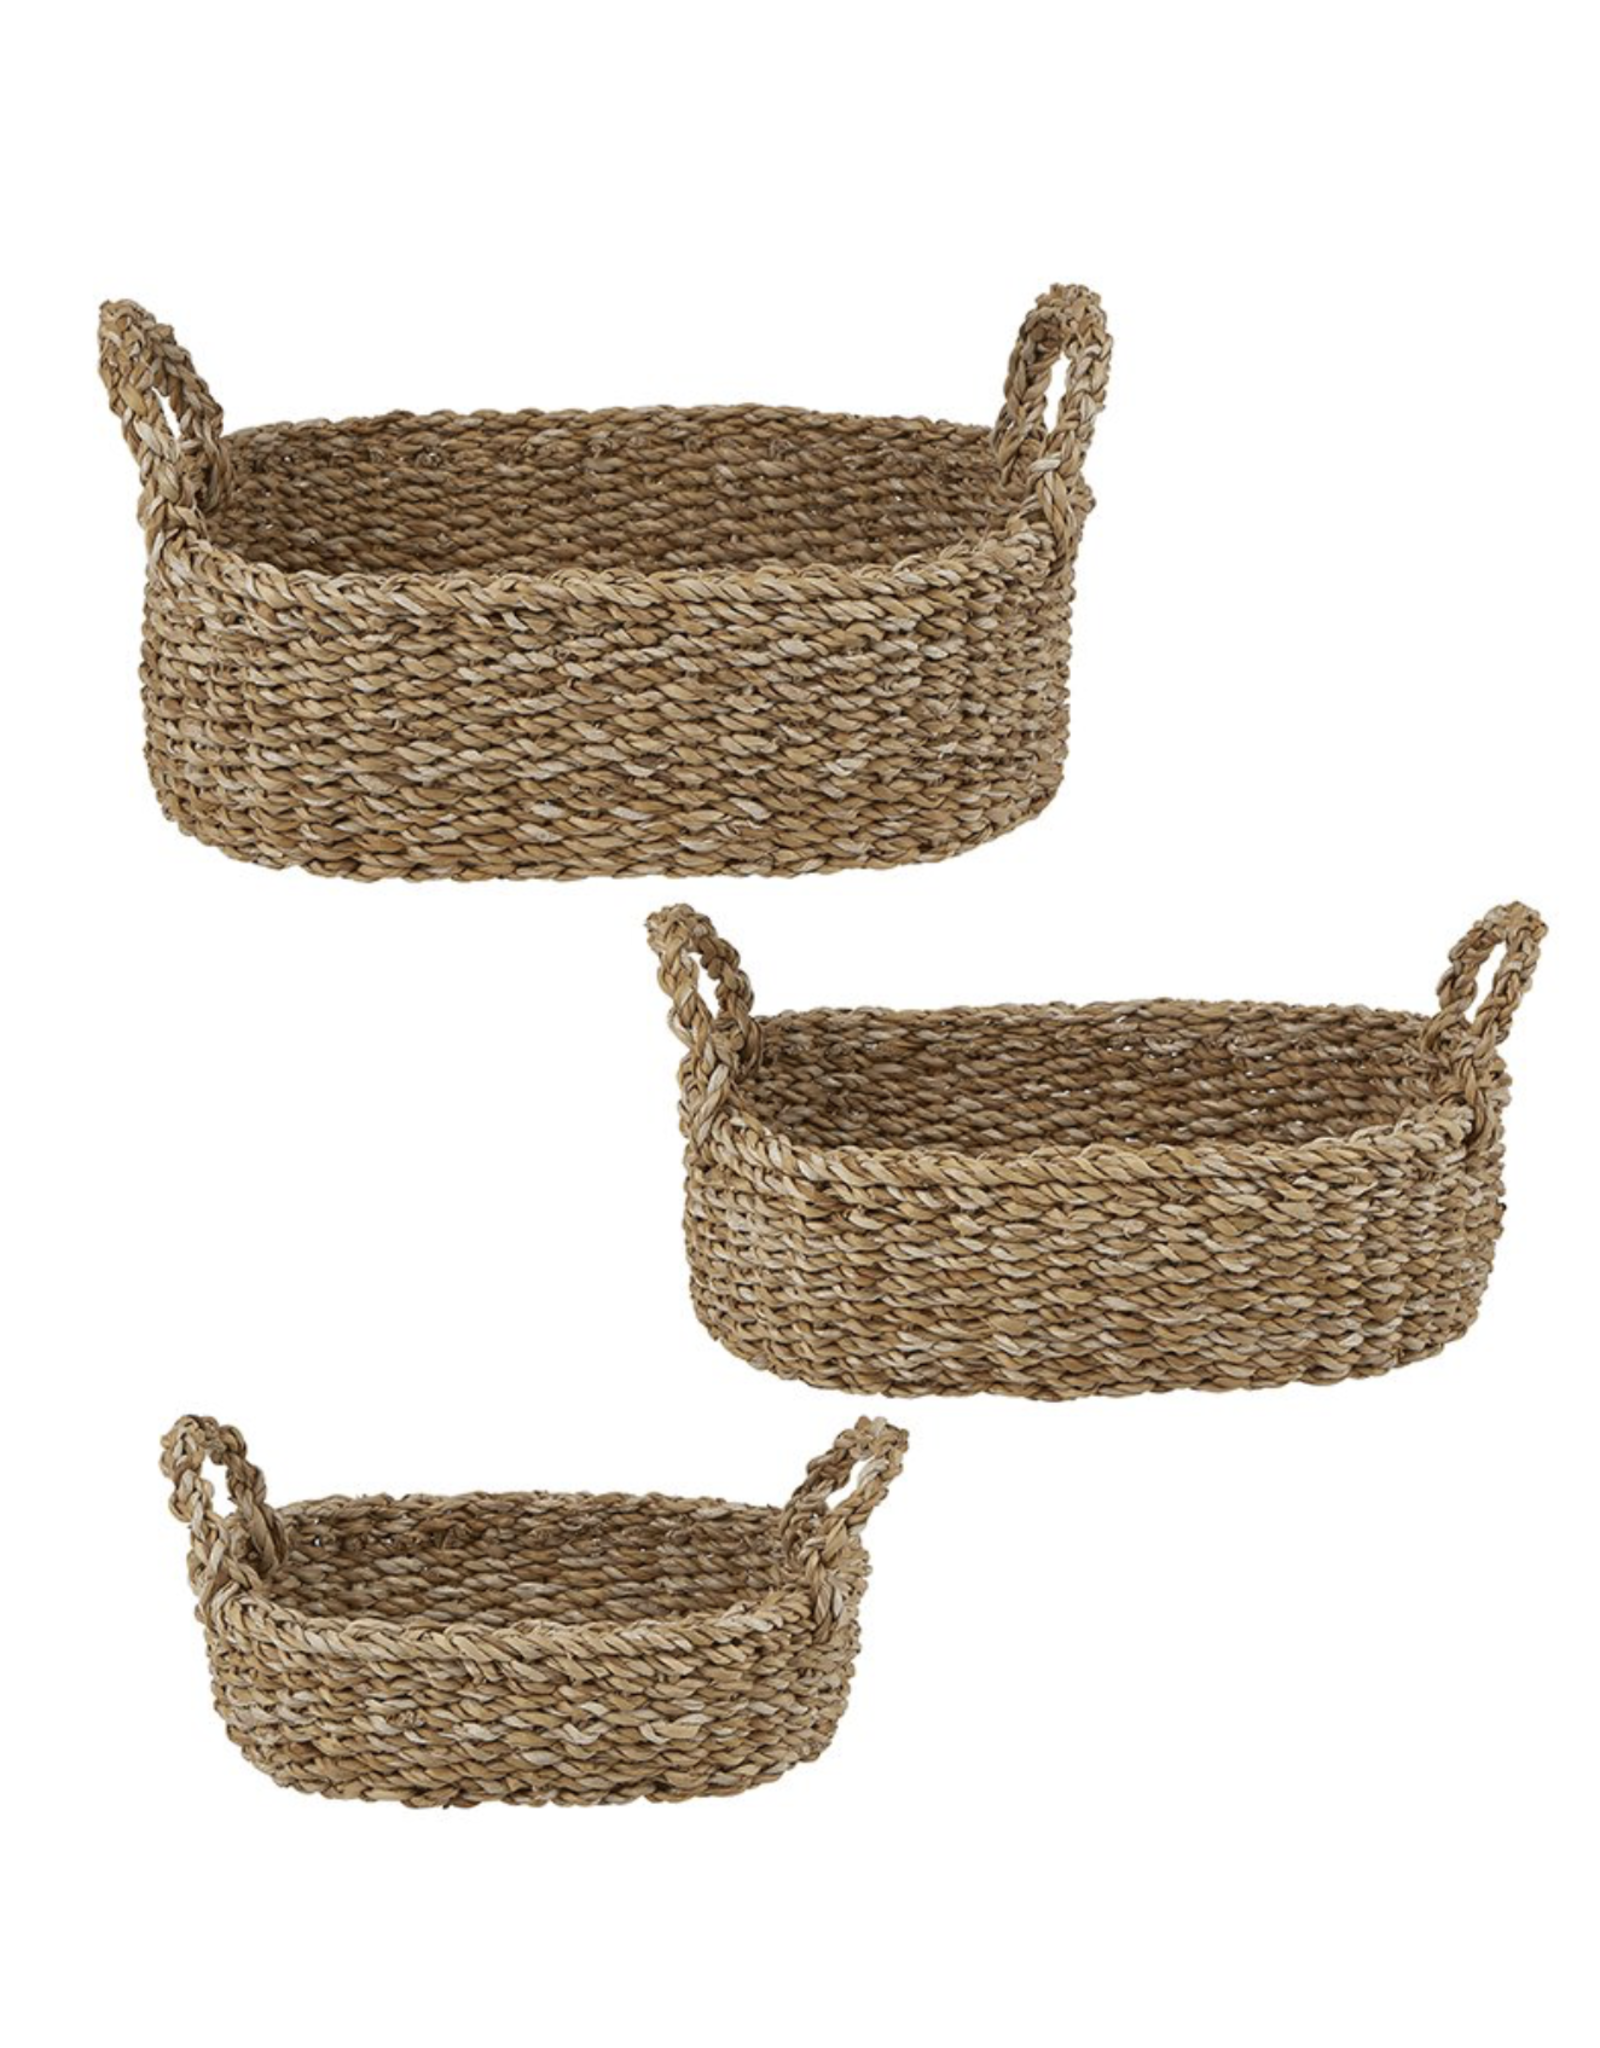 Creative Brands Medium Seagrass Oval Basket